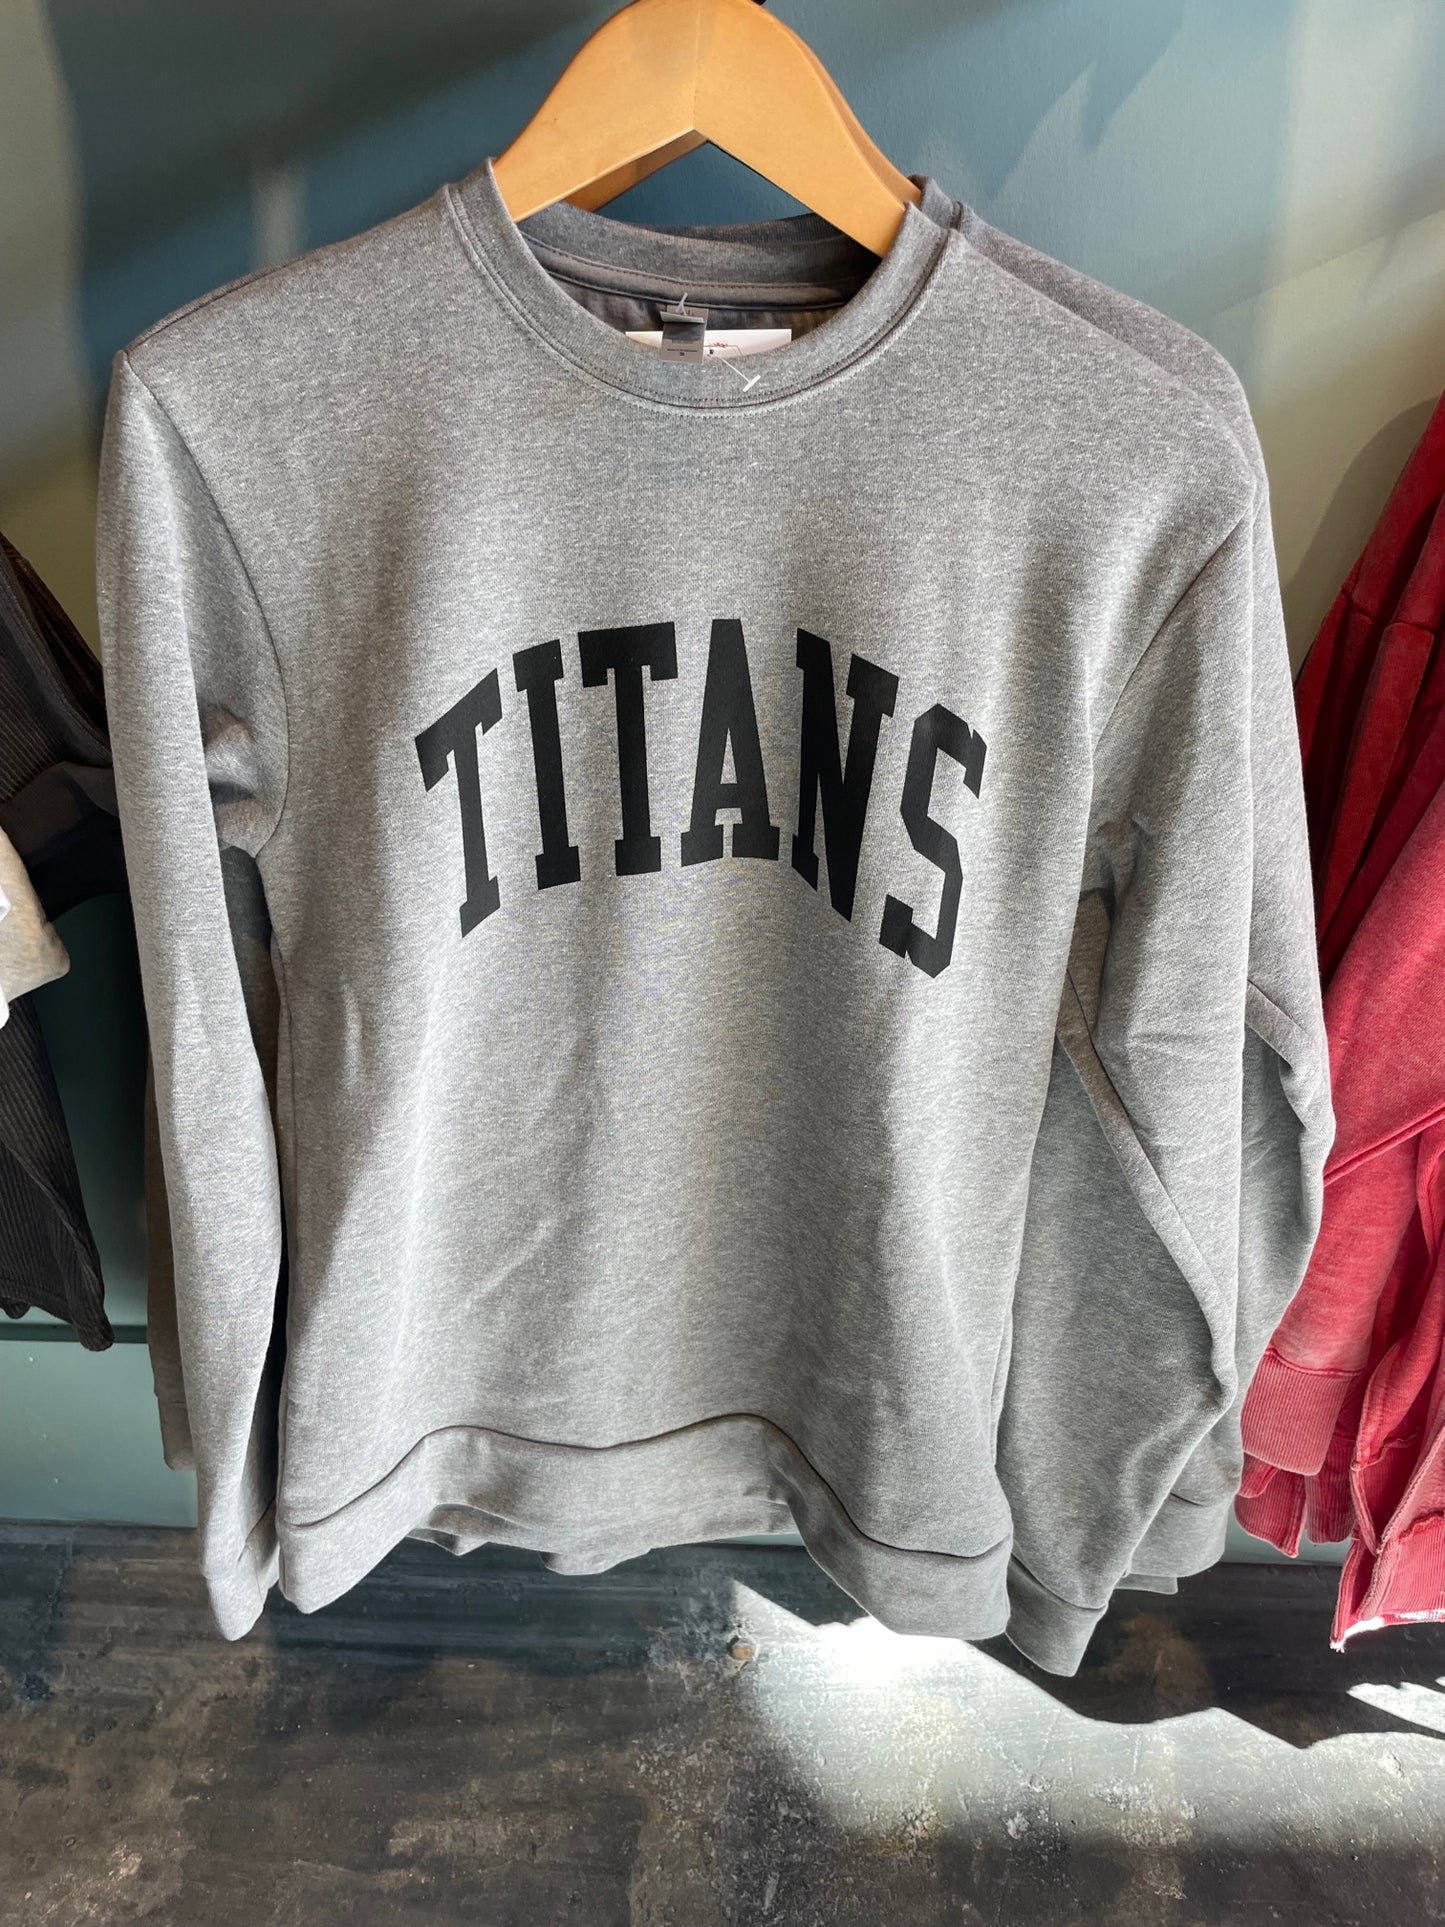 Titans crew sweatshirt